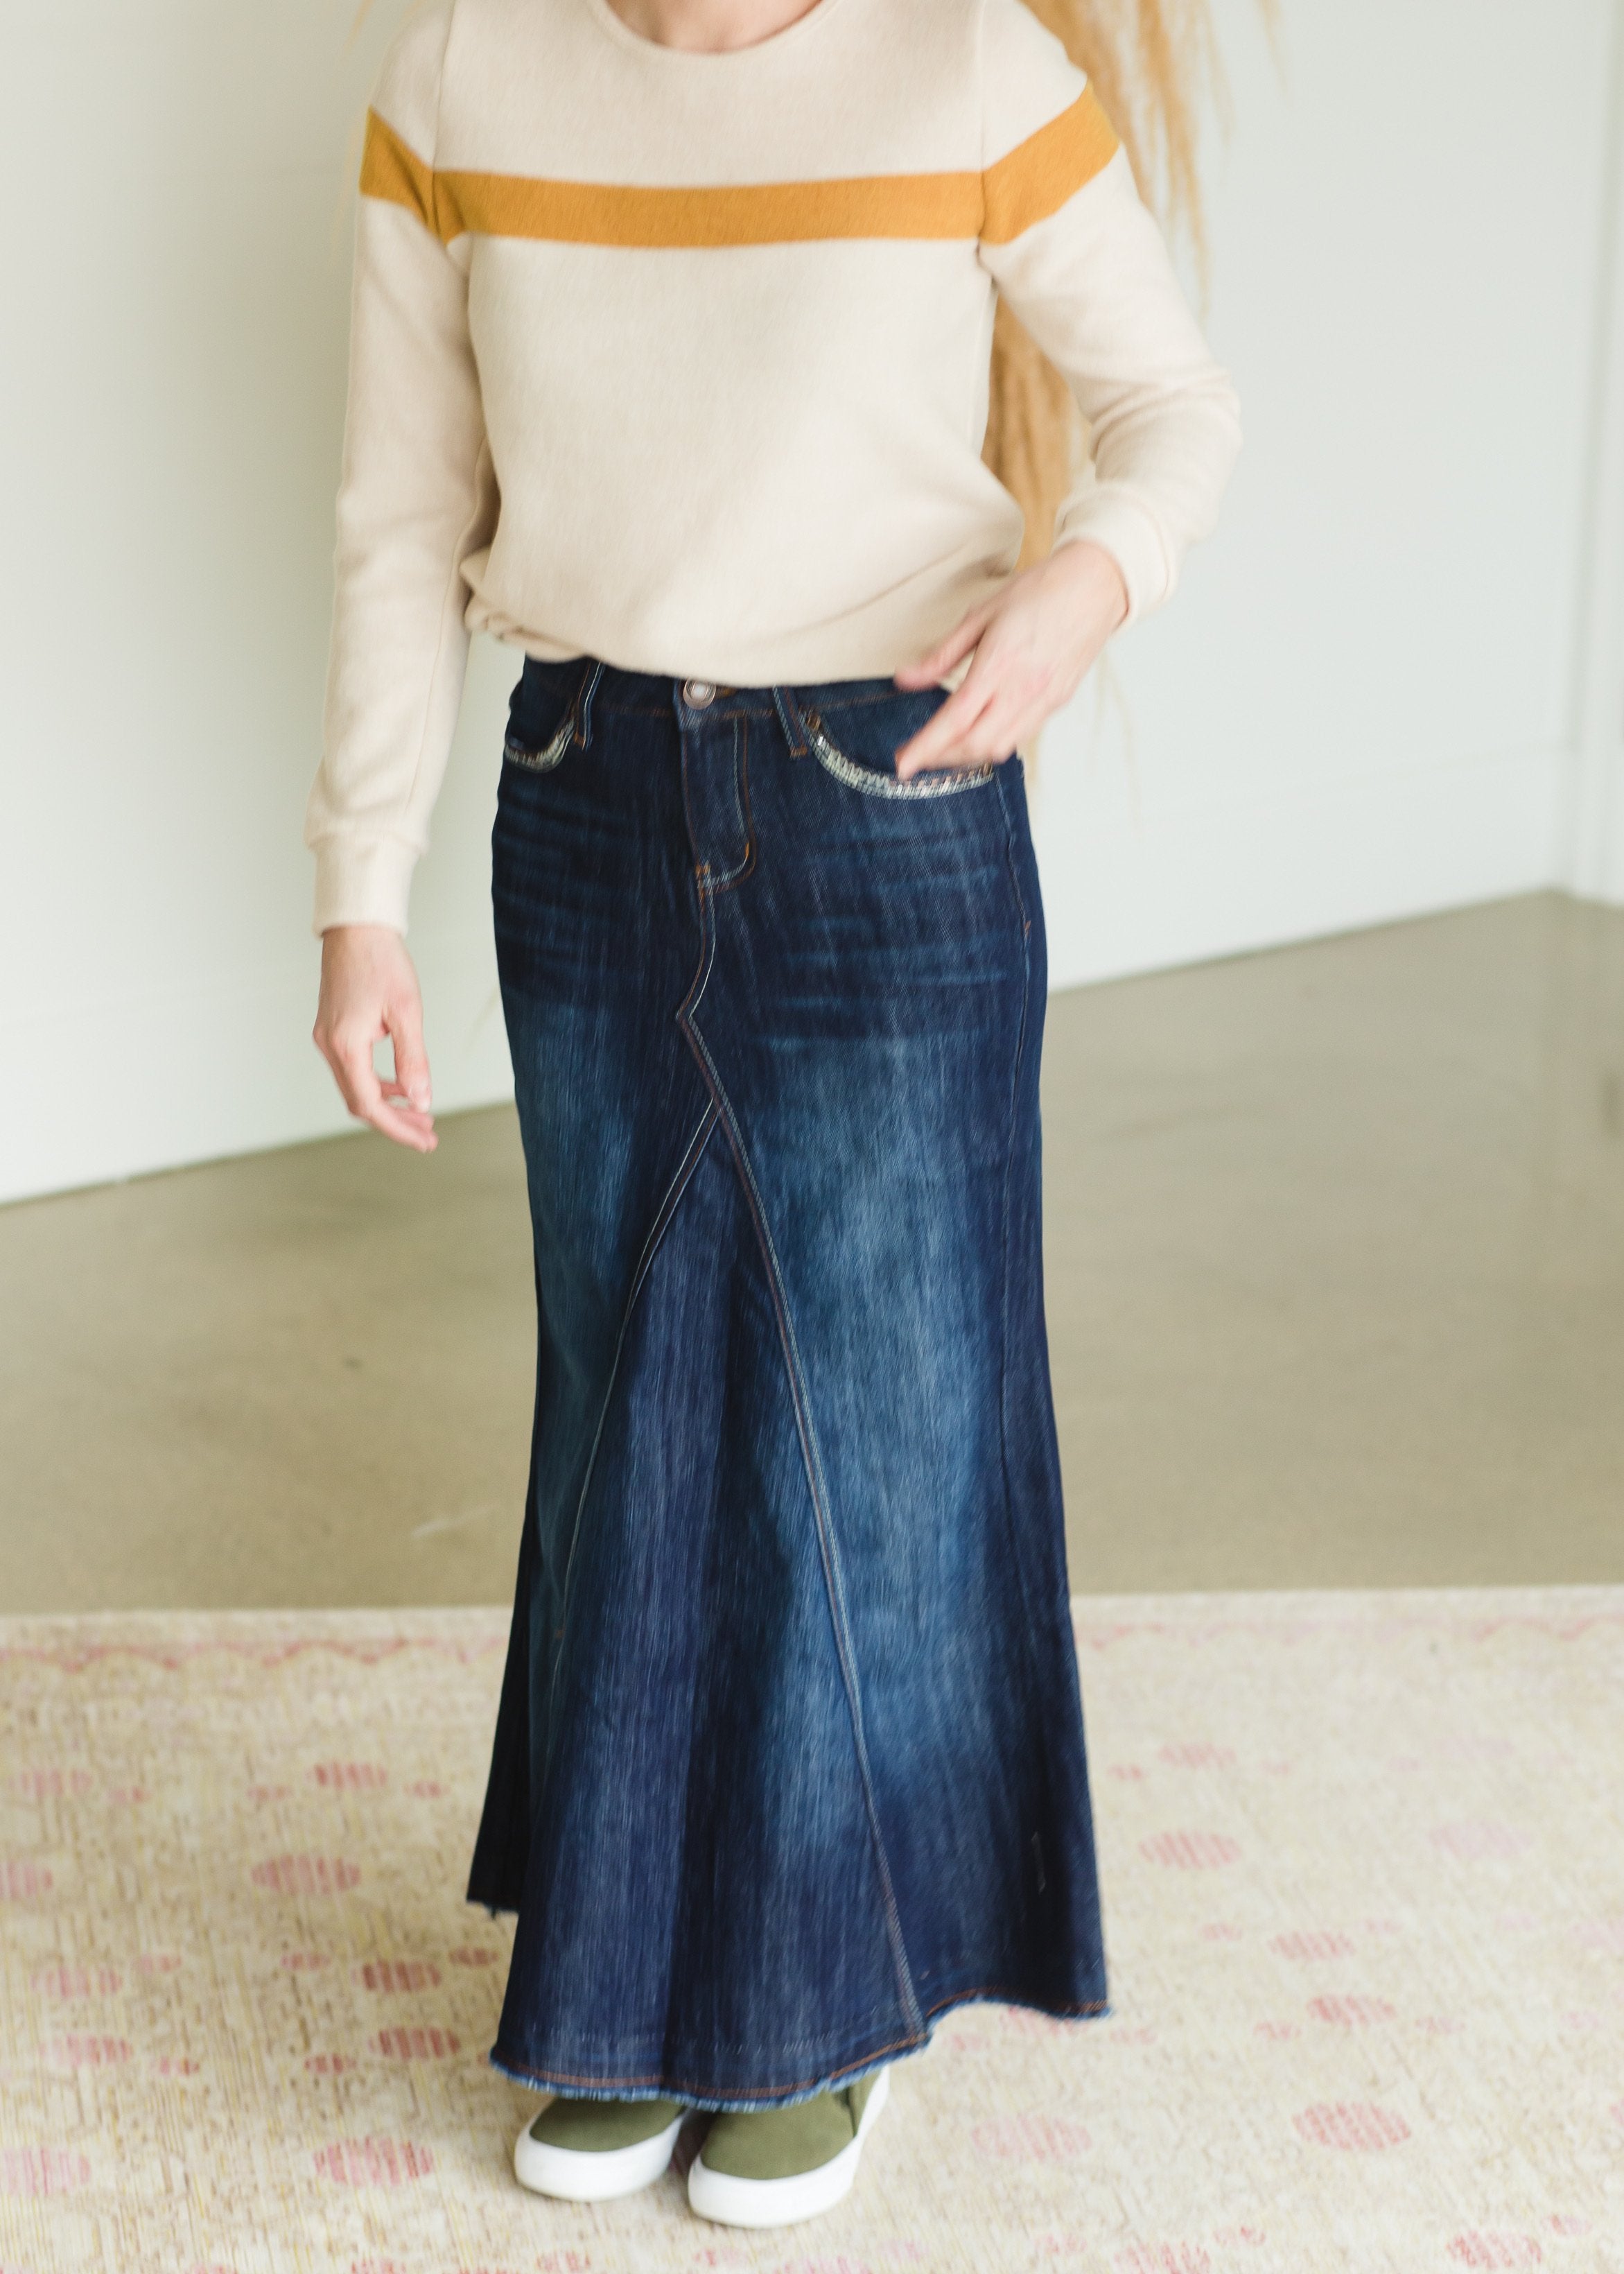 Buy SweatyRocks Women's Casual Long Denim Skirt High Rise A Line Raw Hem Jean  Skirts, Plain Blue, L at Amazon.in